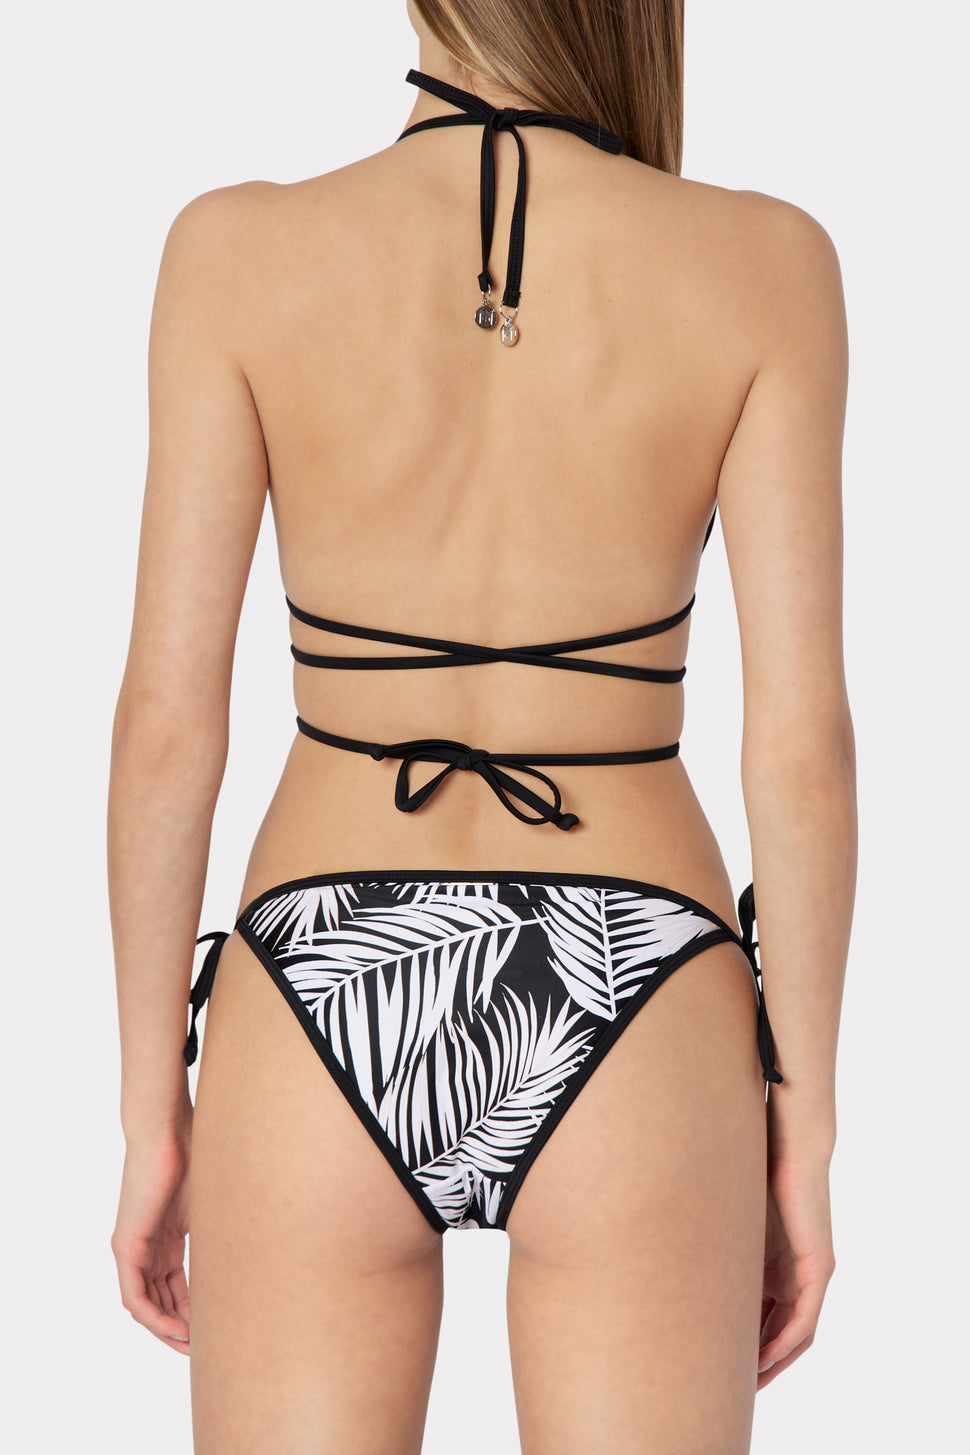 Gingham Ruffle Trim Triangle Bikini Two Piece Swimsuit, L / Black